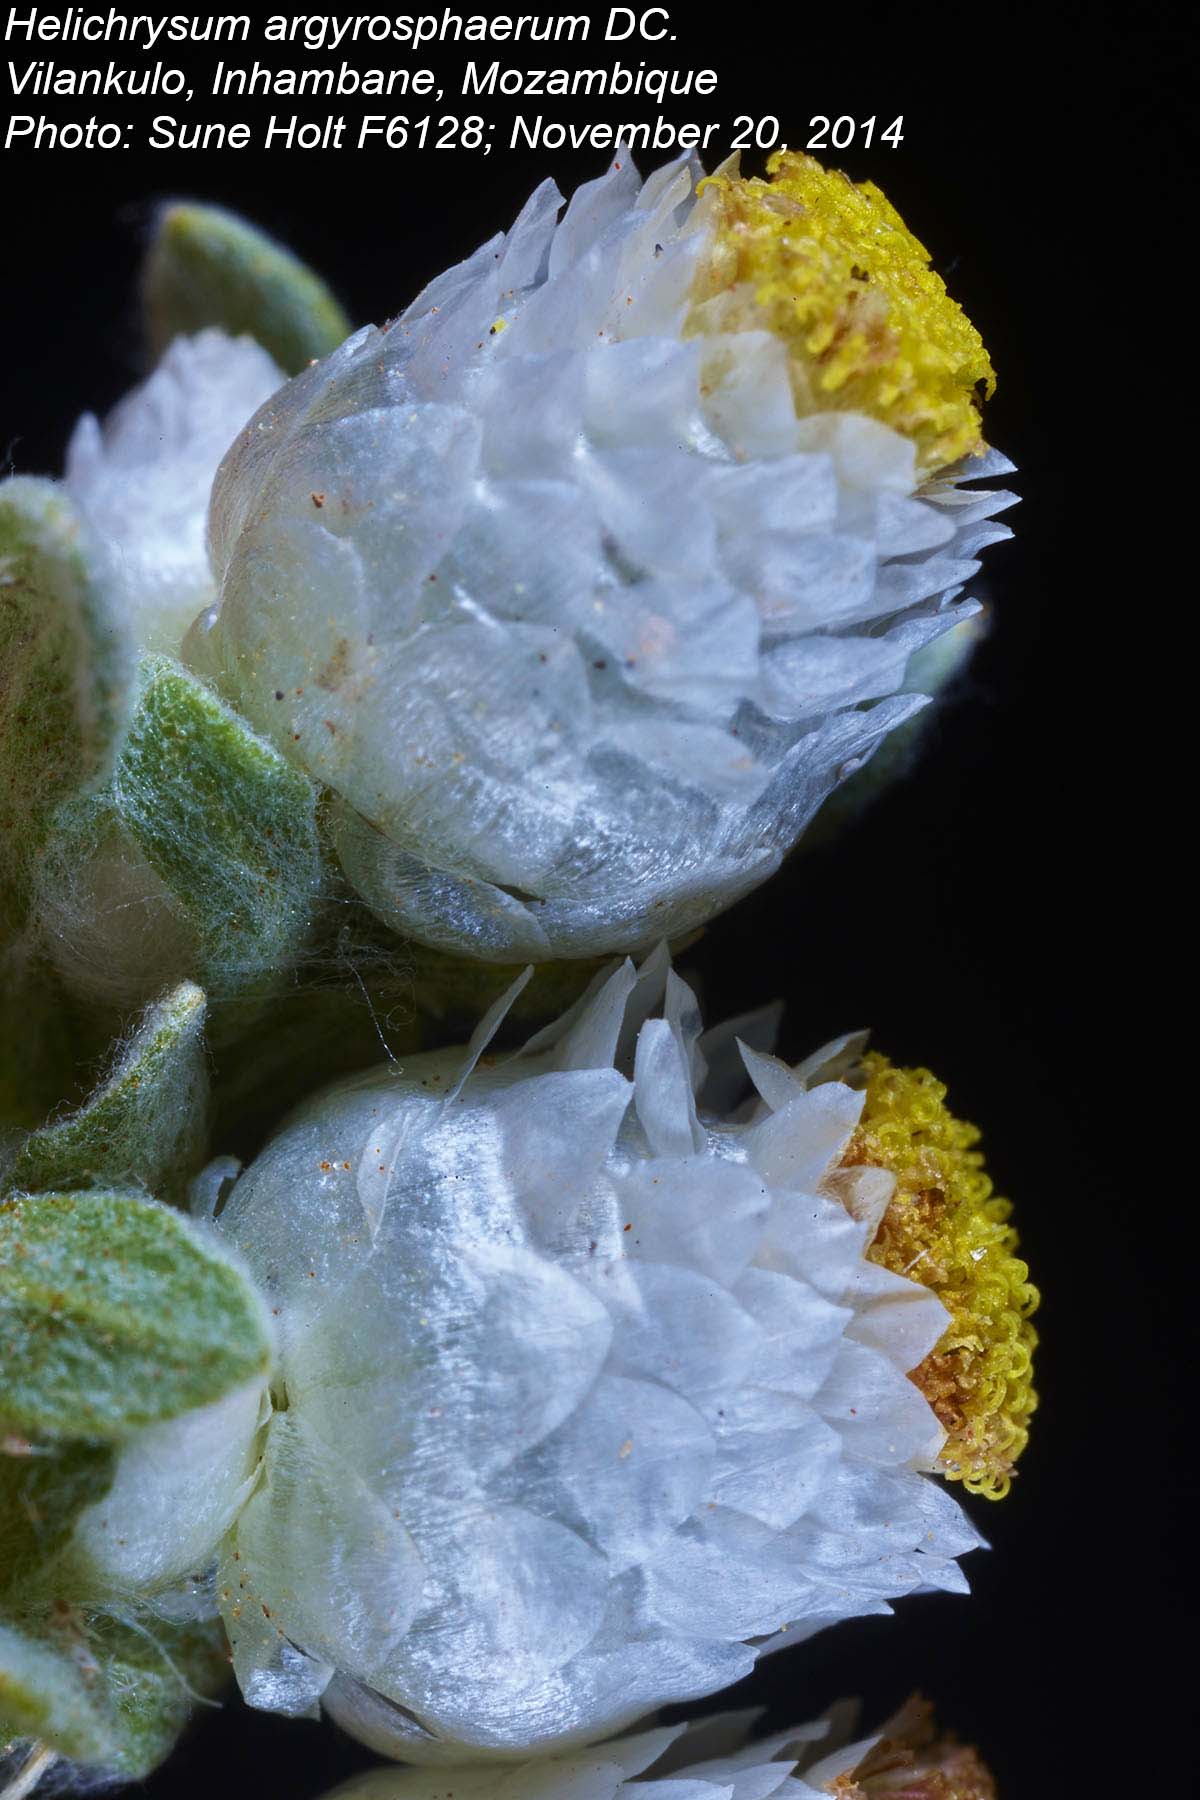 Helichrysum argyrosphaerum